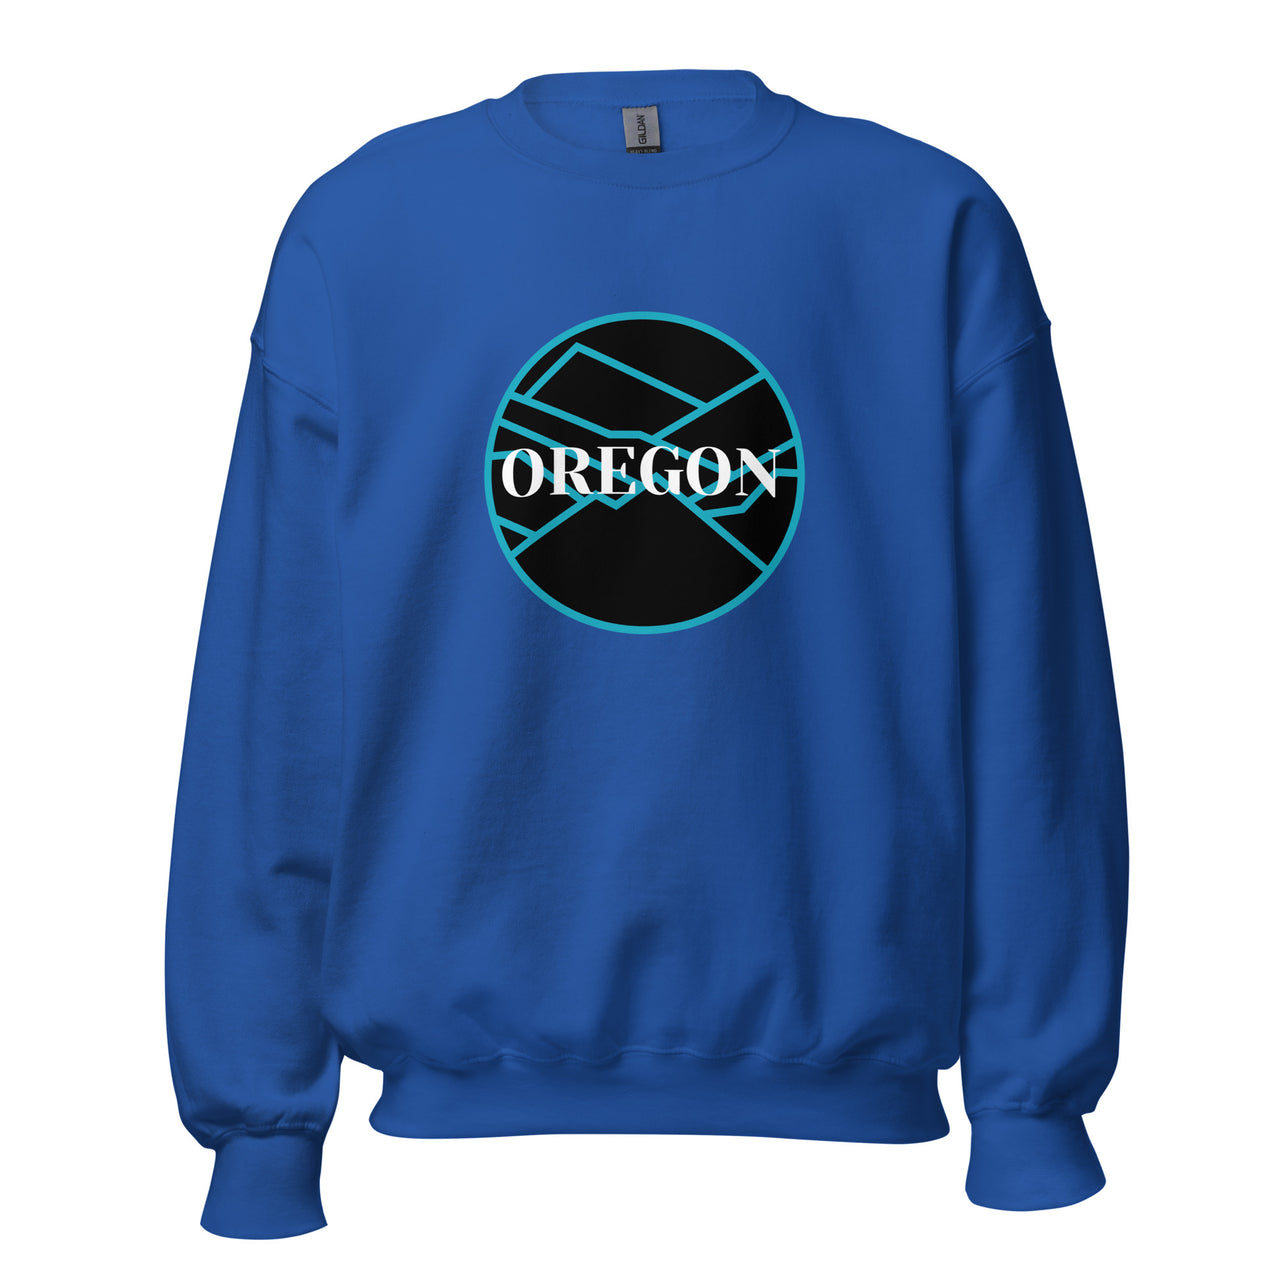 Oregon - Blue/Black - Unisex Sweatshirt